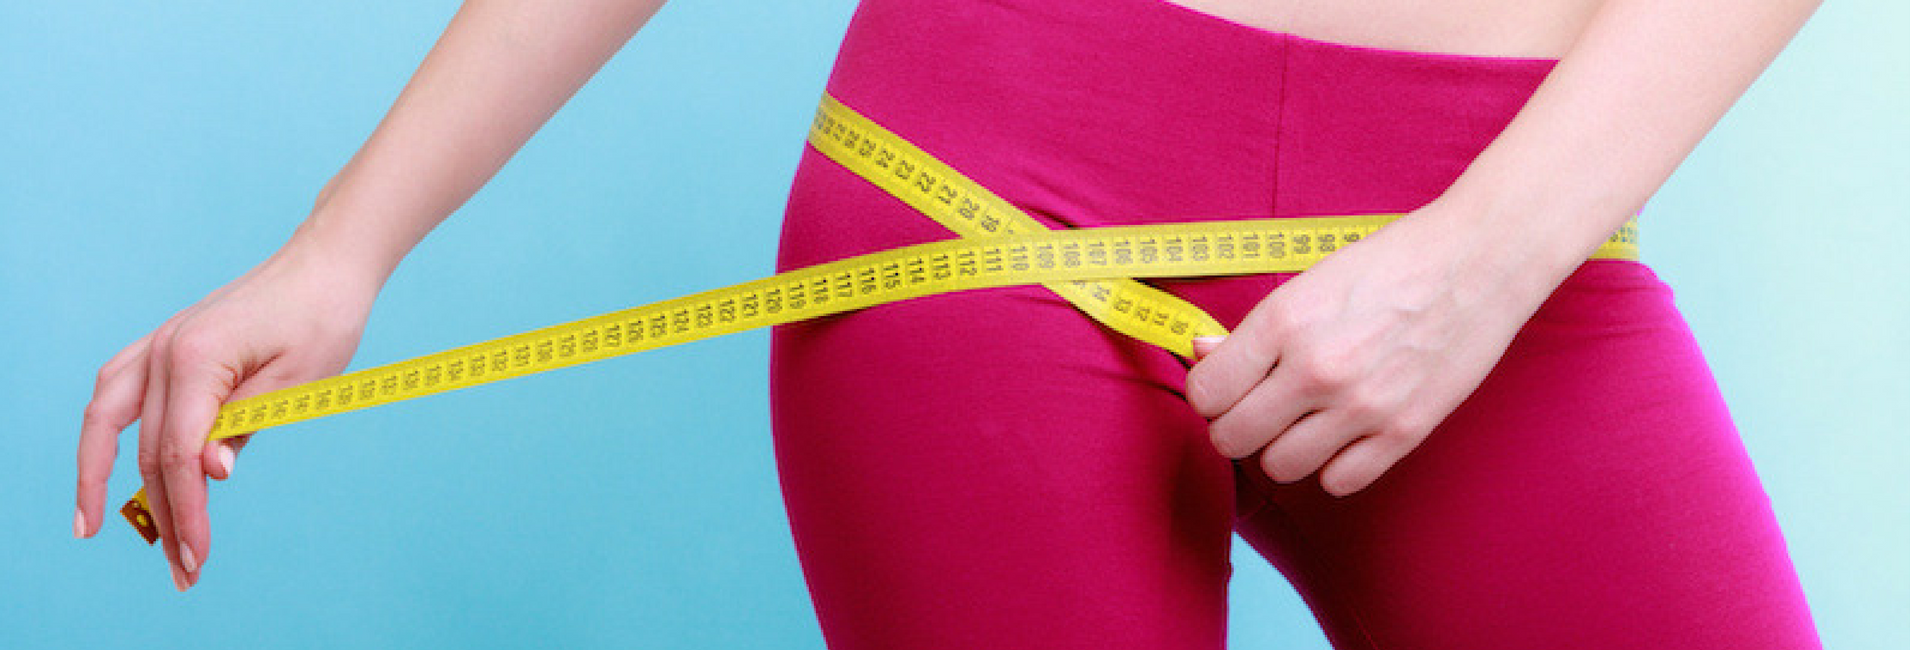 Slimming Center in Dubai | Fat Reduction | Full Body ...